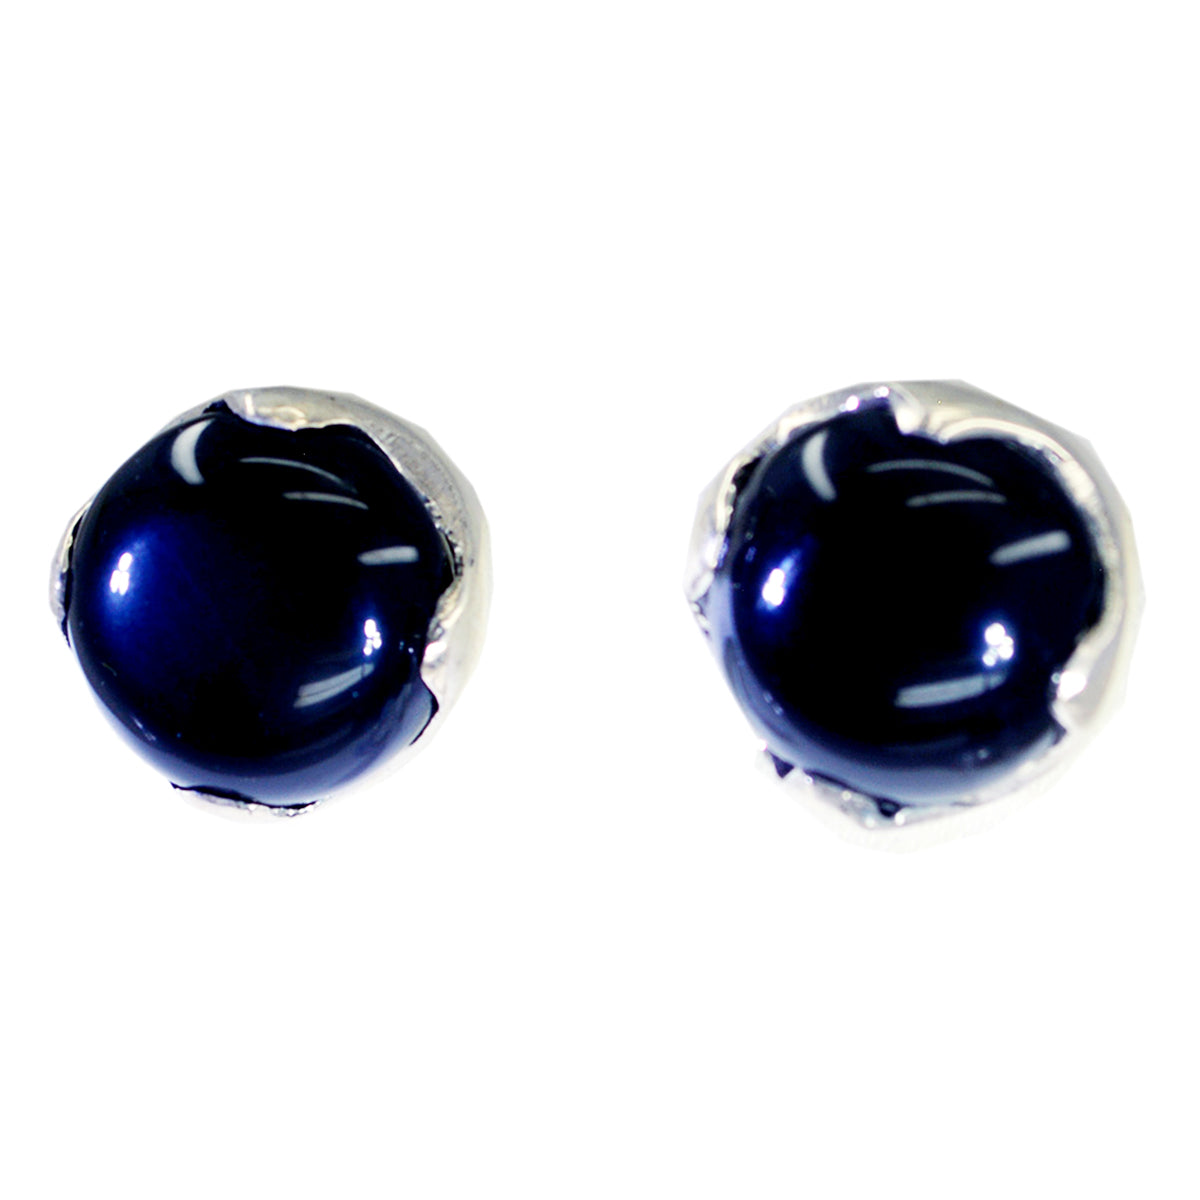 Riyo Natural Gemstone round Cabochon Black Onyx Silver Earrings b' day gift